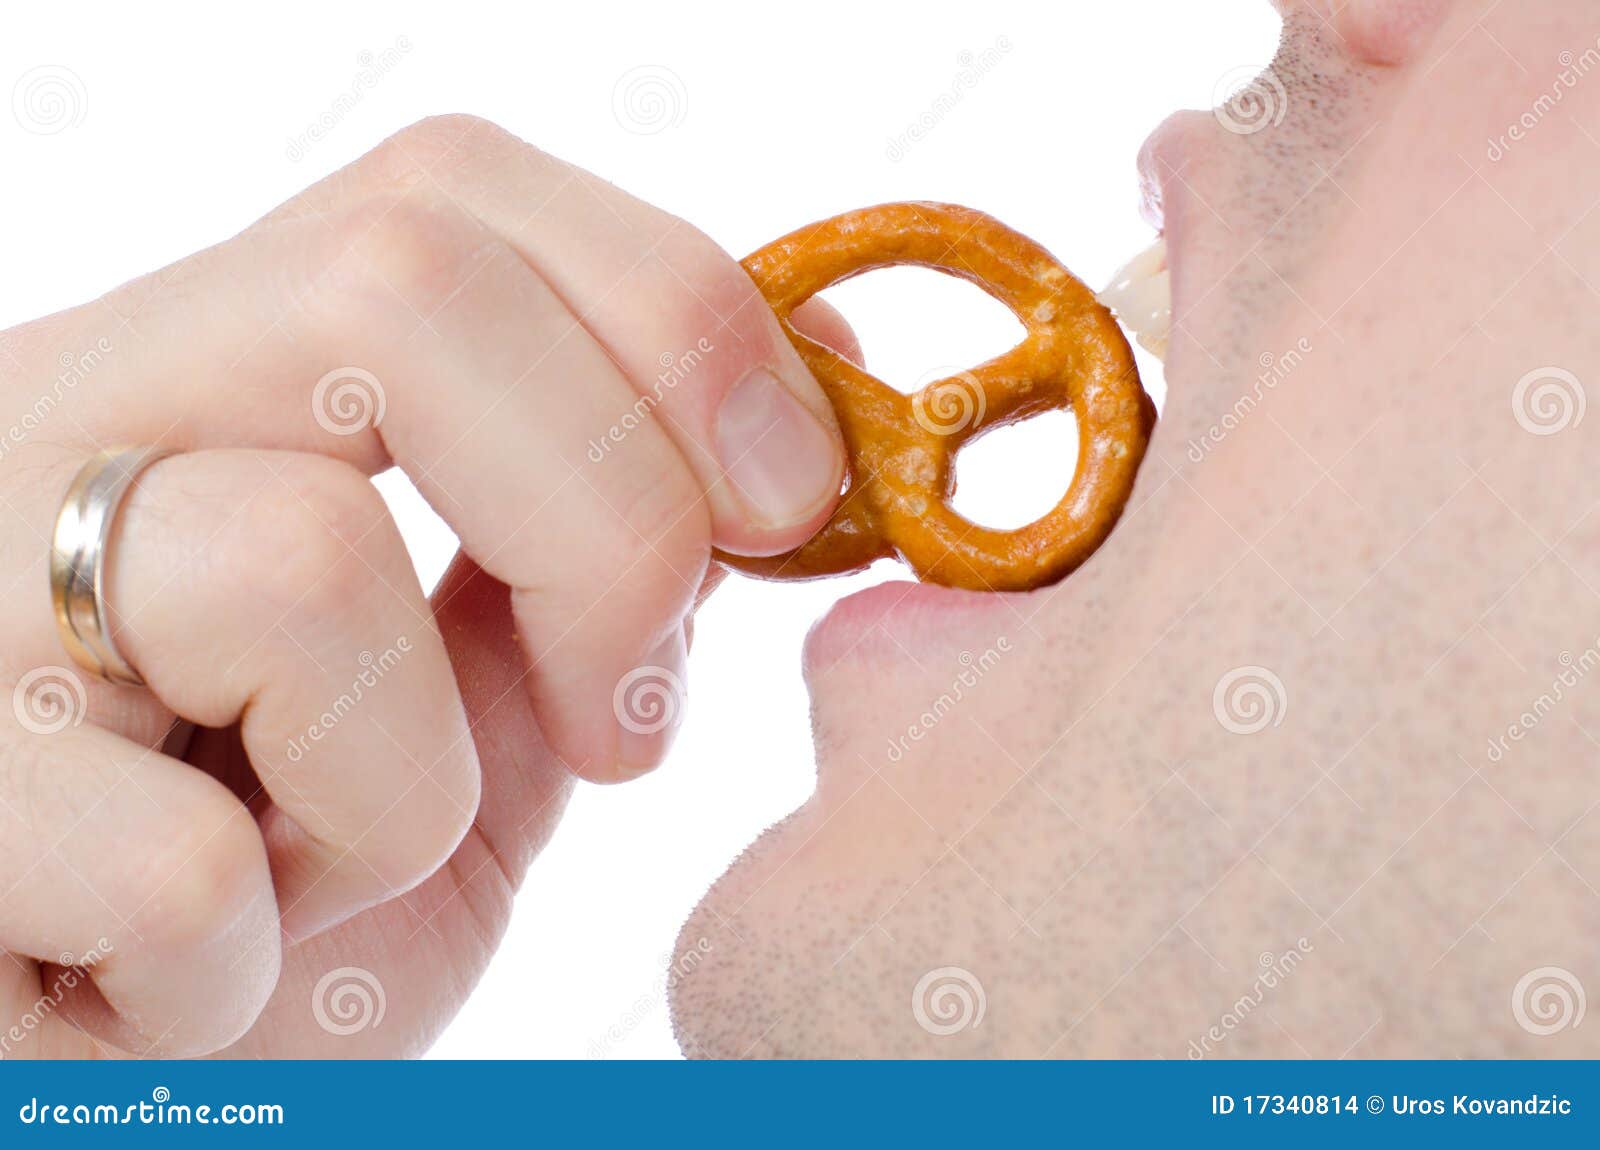 man-eating-pretzel-17340814.jpg